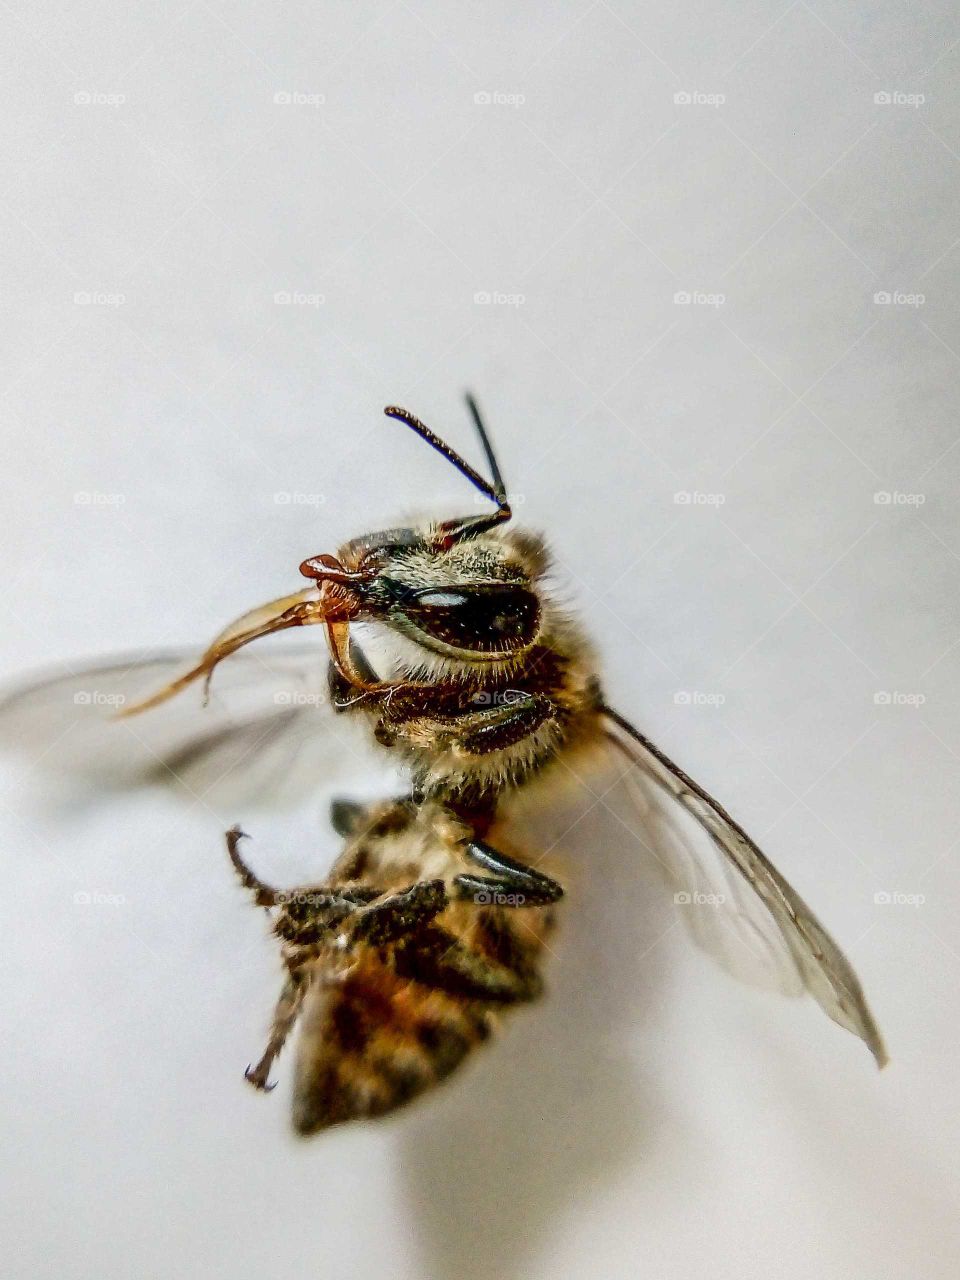 Compound eye, Antennae, proboscis of honey bee